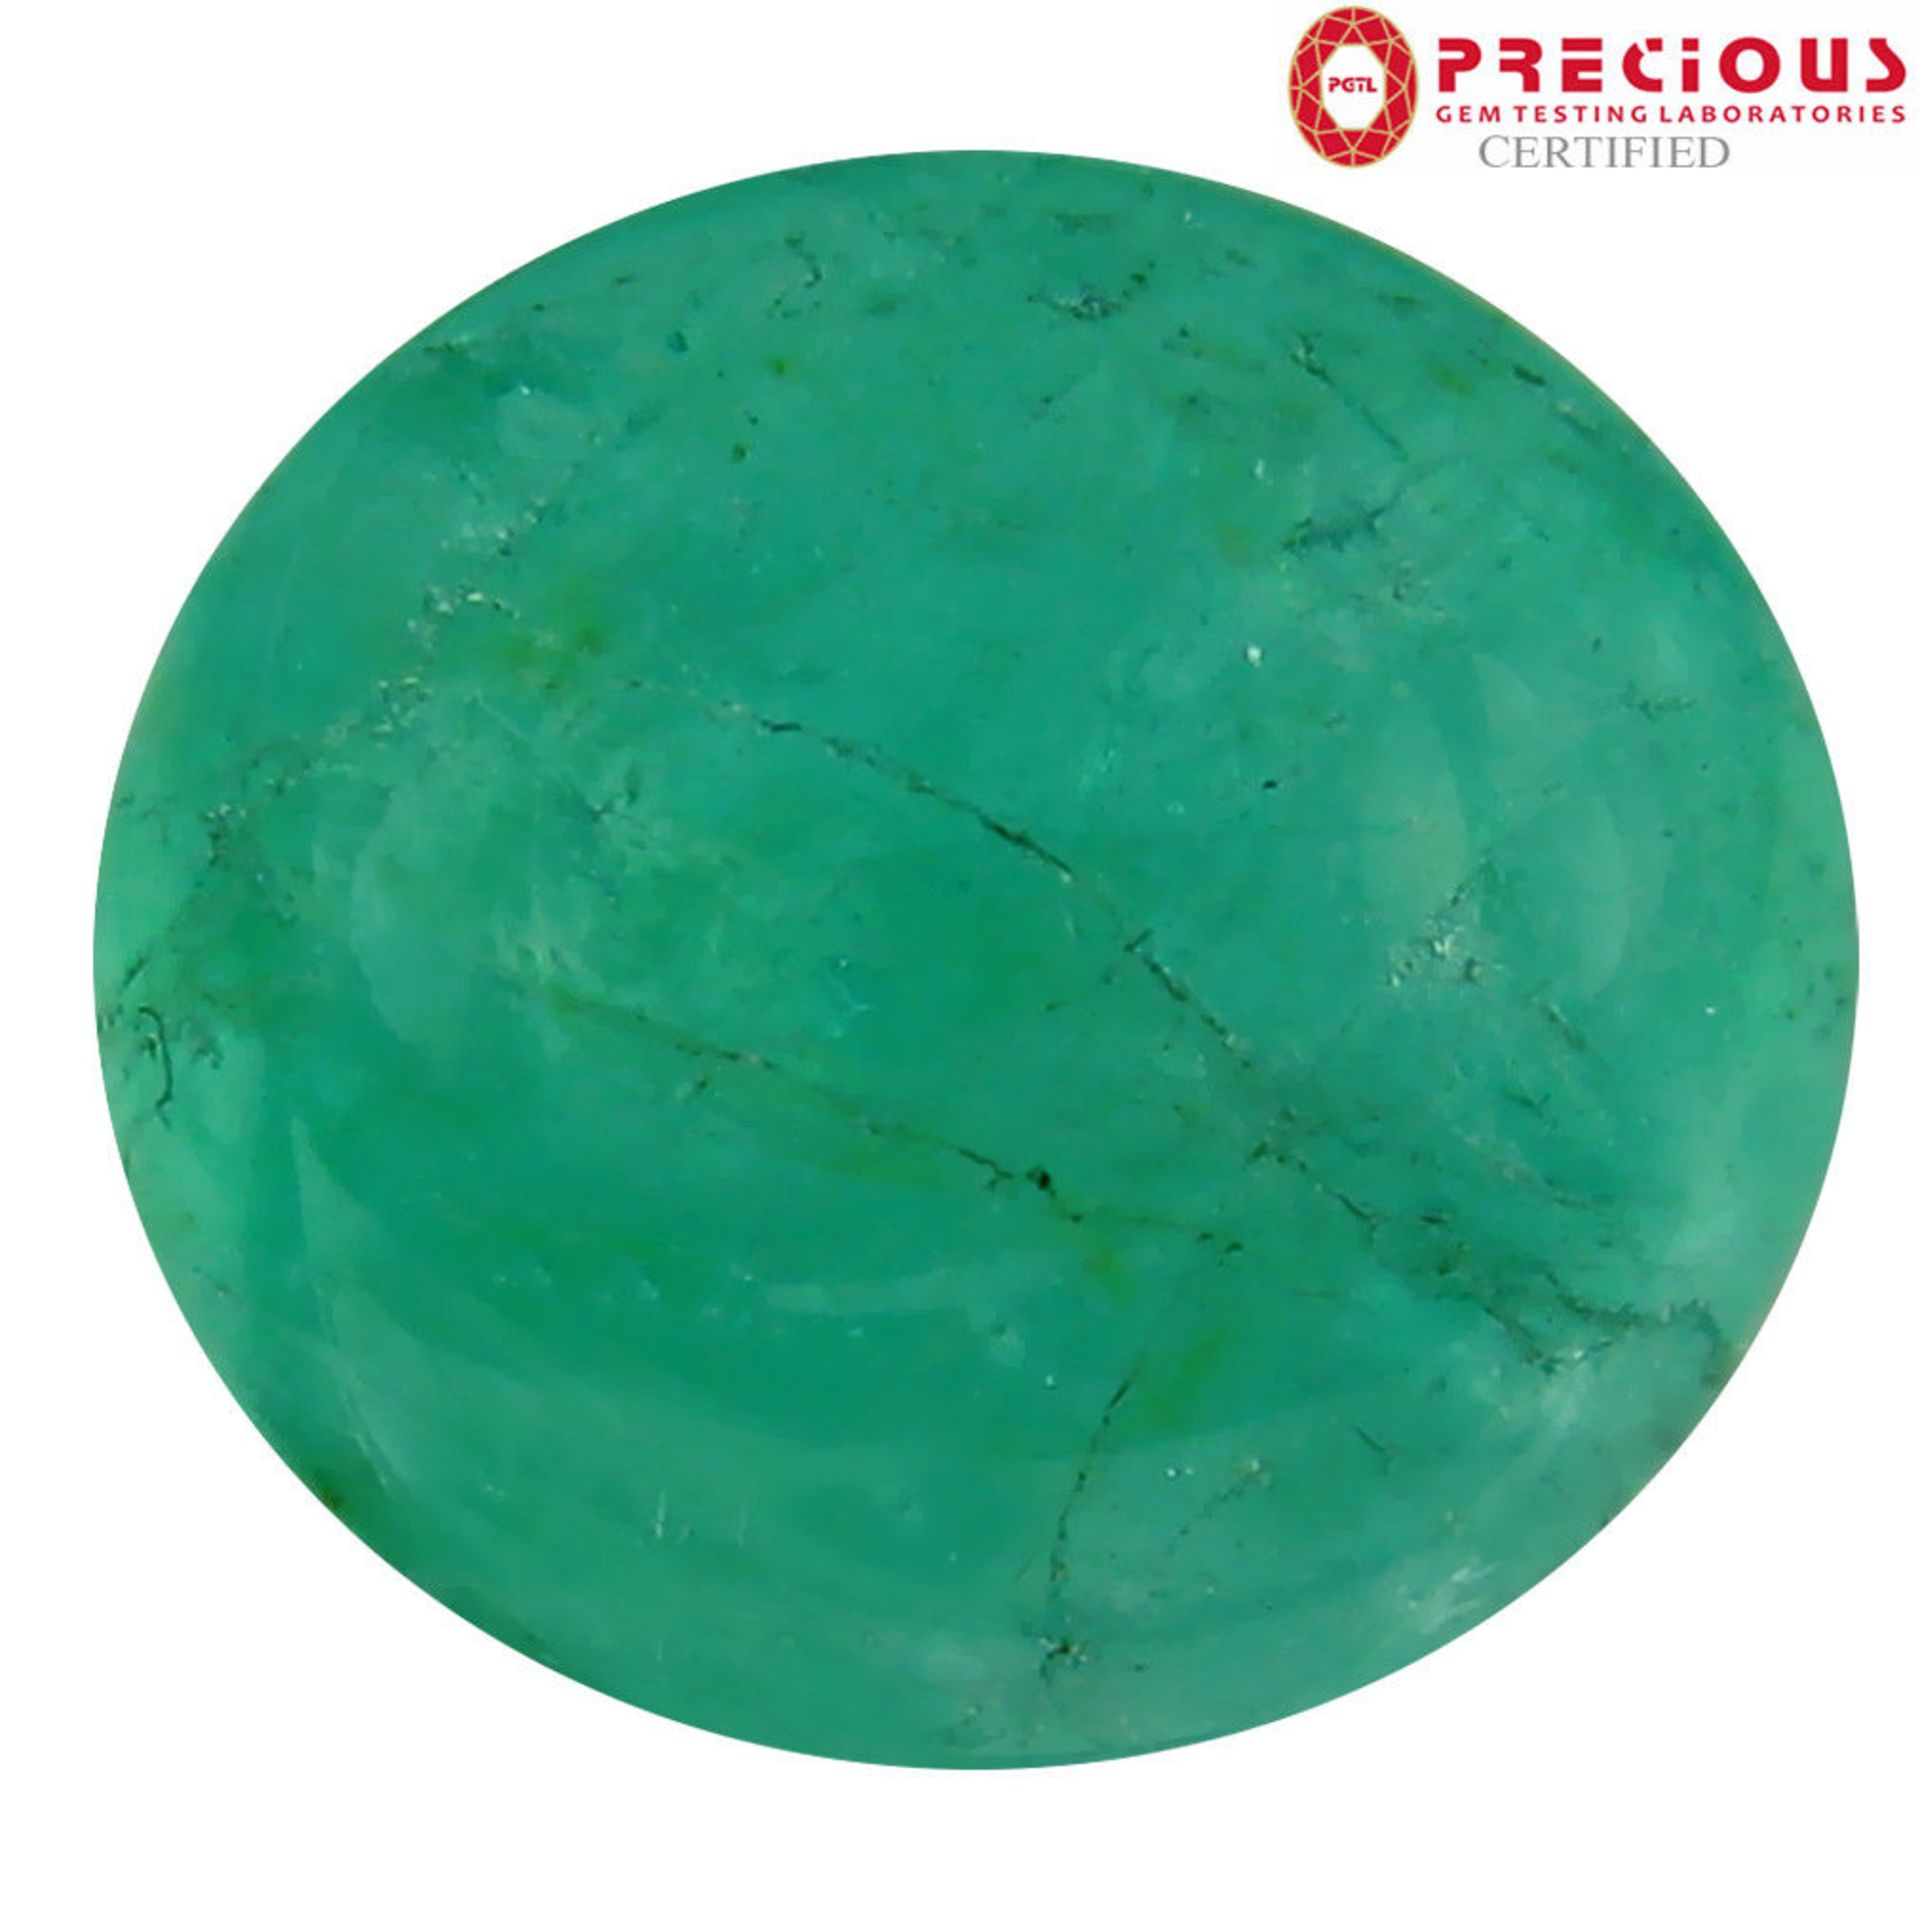 8.11 Carat PGTL & AGI Certified Oval Cabochon Cut (12 x 11mm) Colombian Emerald.